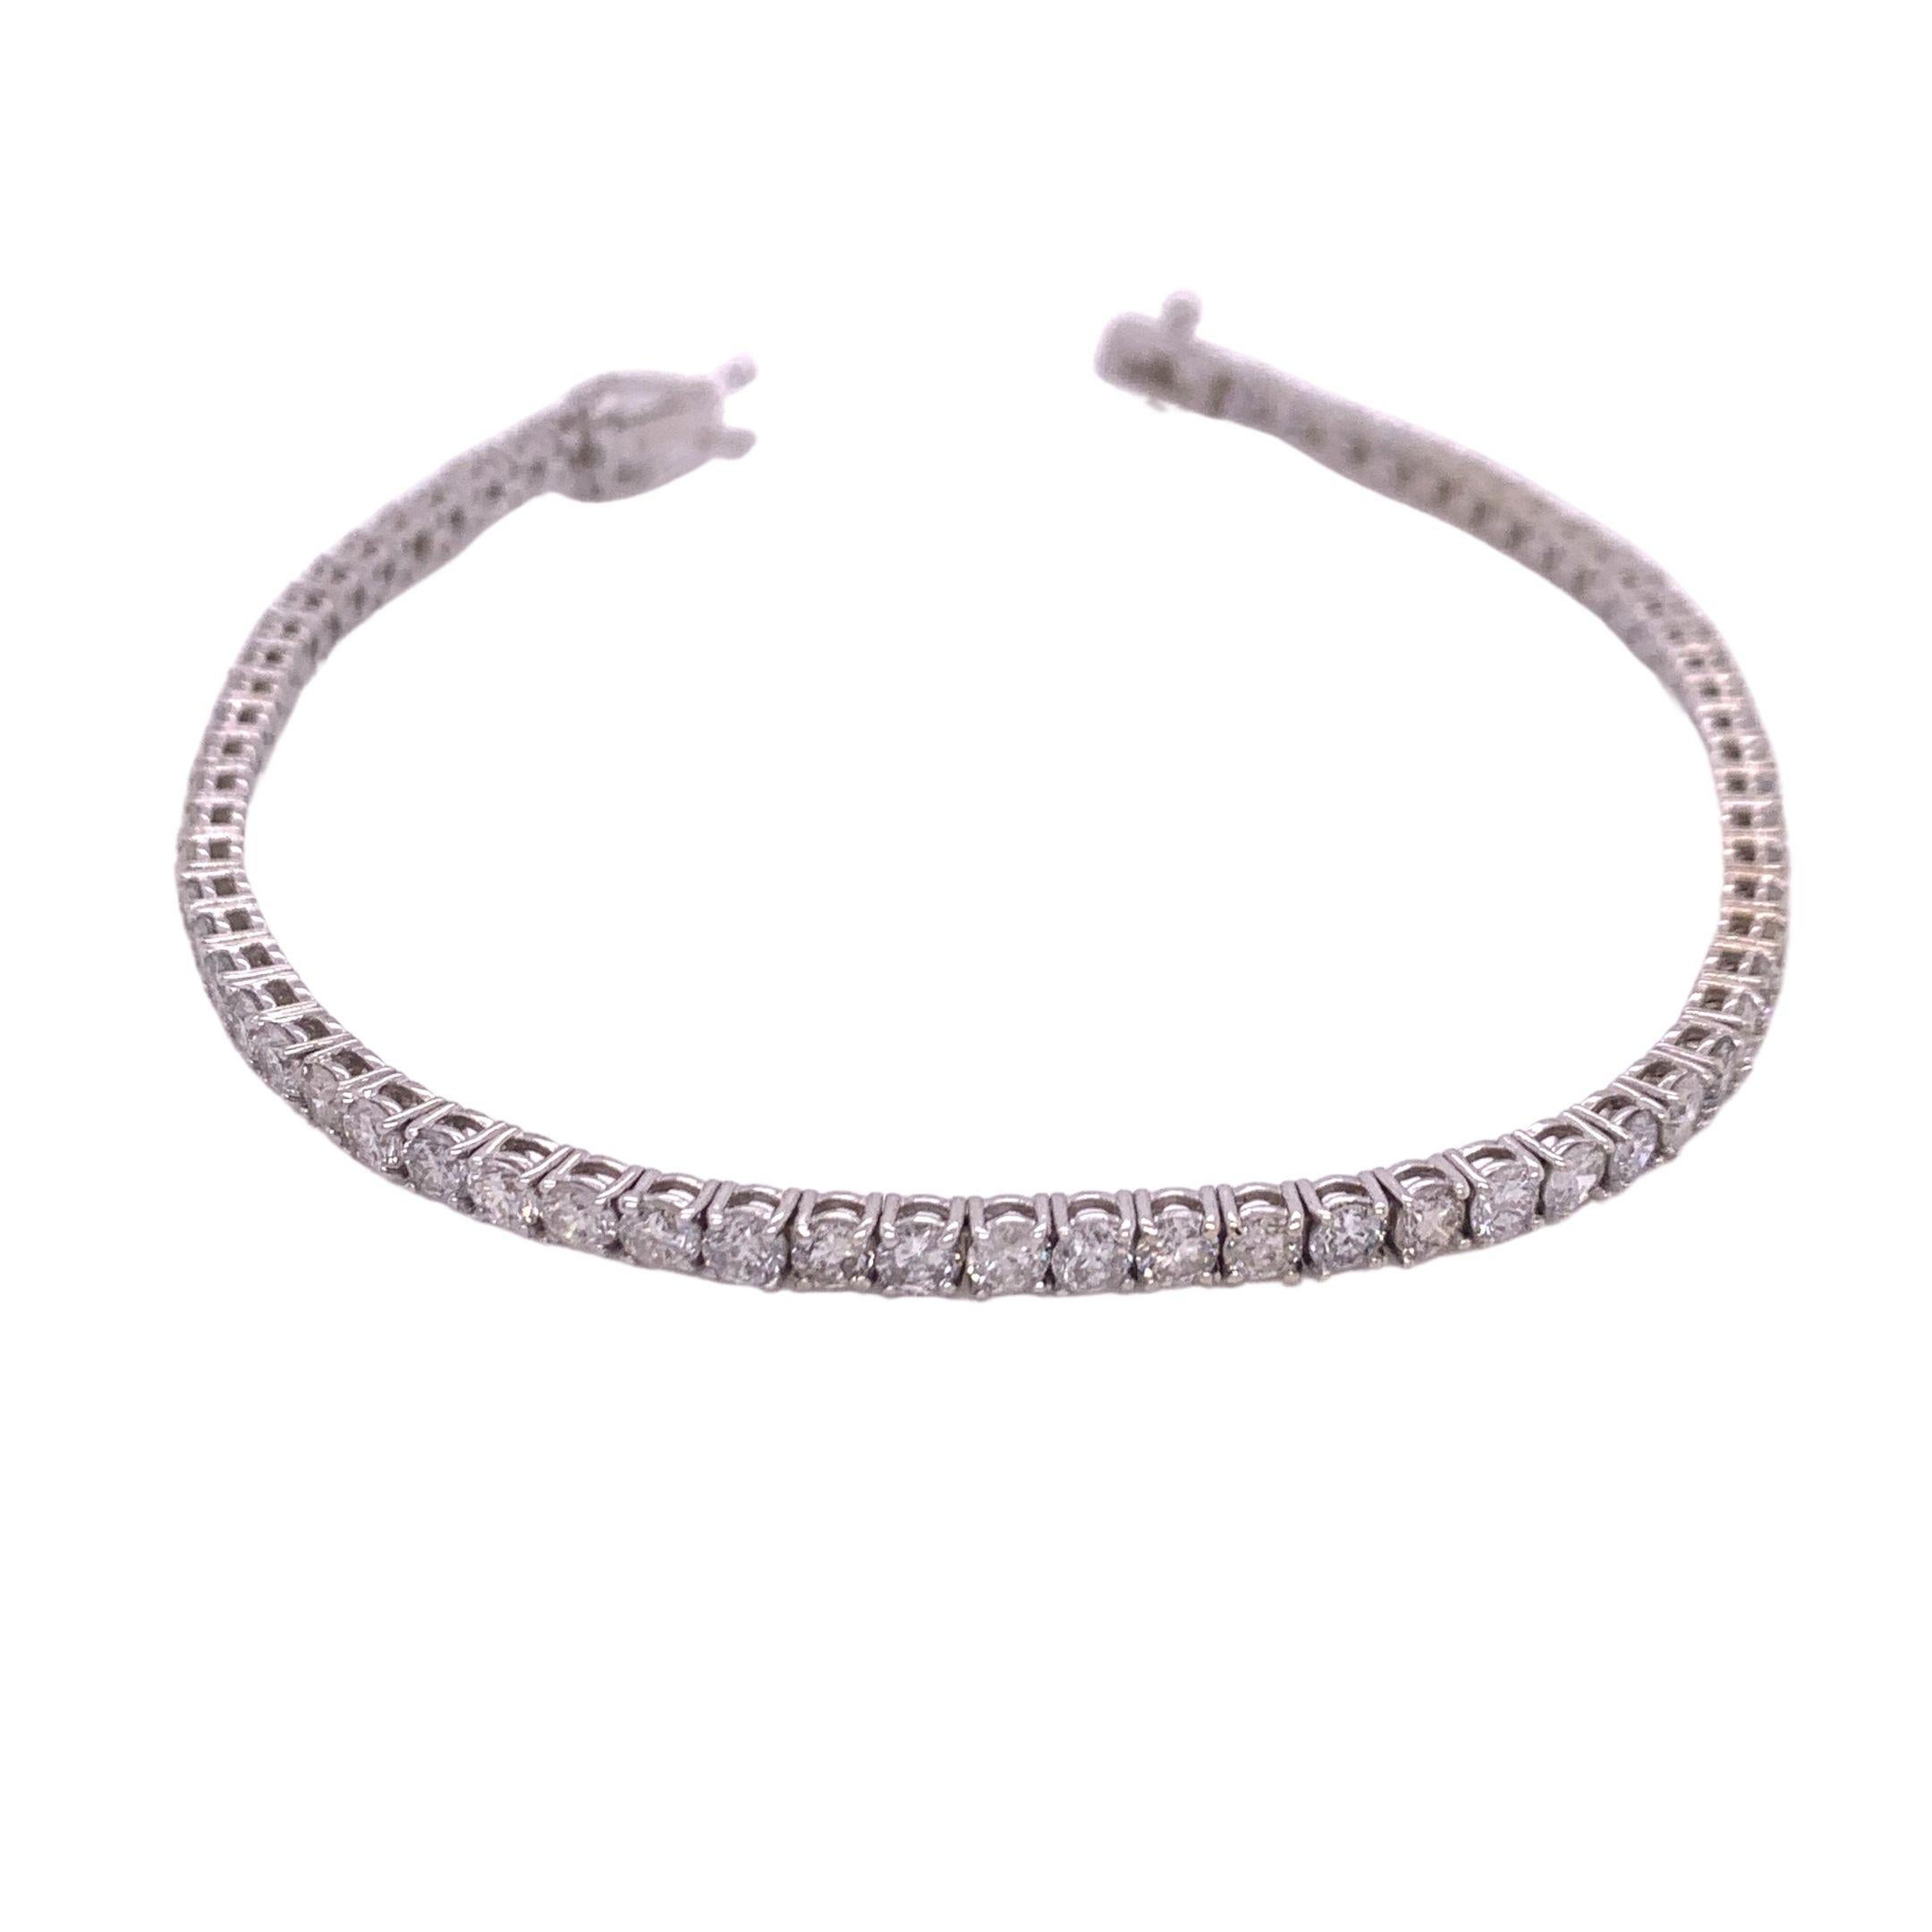 Diamond tennis/line bracelet made with real/natural brilliant cut diamonds. Diamond Weight: 4.56 carats, Diamond Quantity: 67 (round diamonds). Mounted on 18 karat white gold.